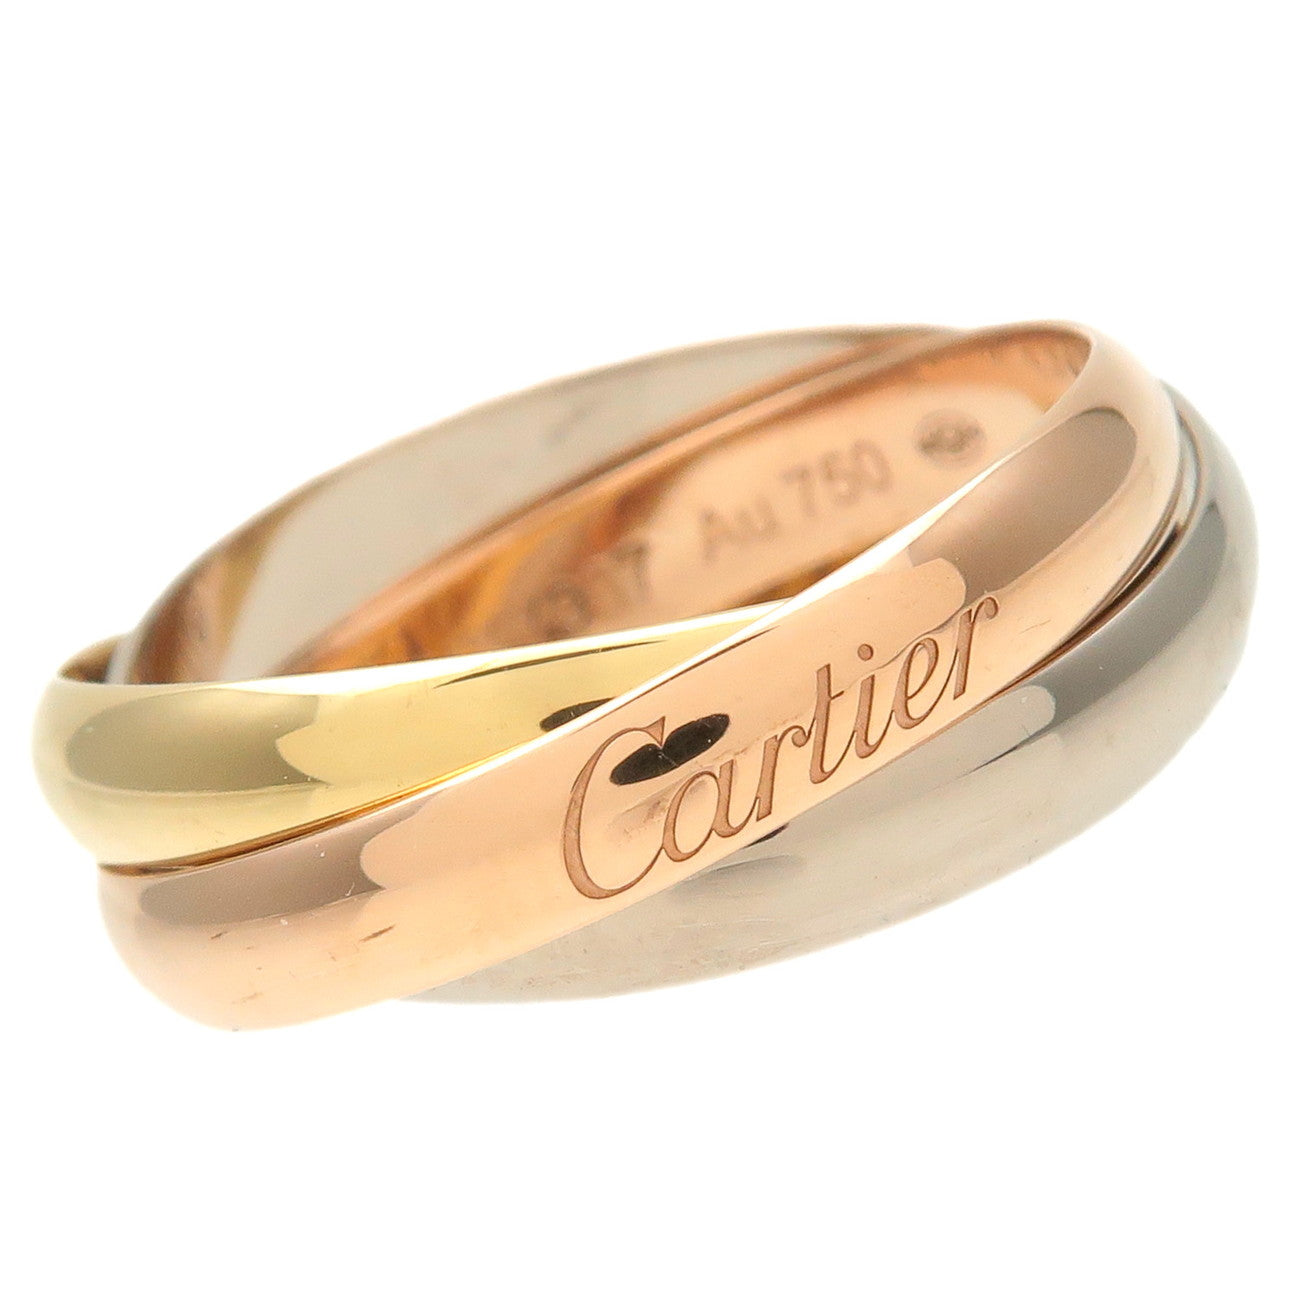 Cartier Trinity Ring SM K18 750YG/WG/PG #47 US4-4.5 EU47 HK9.5